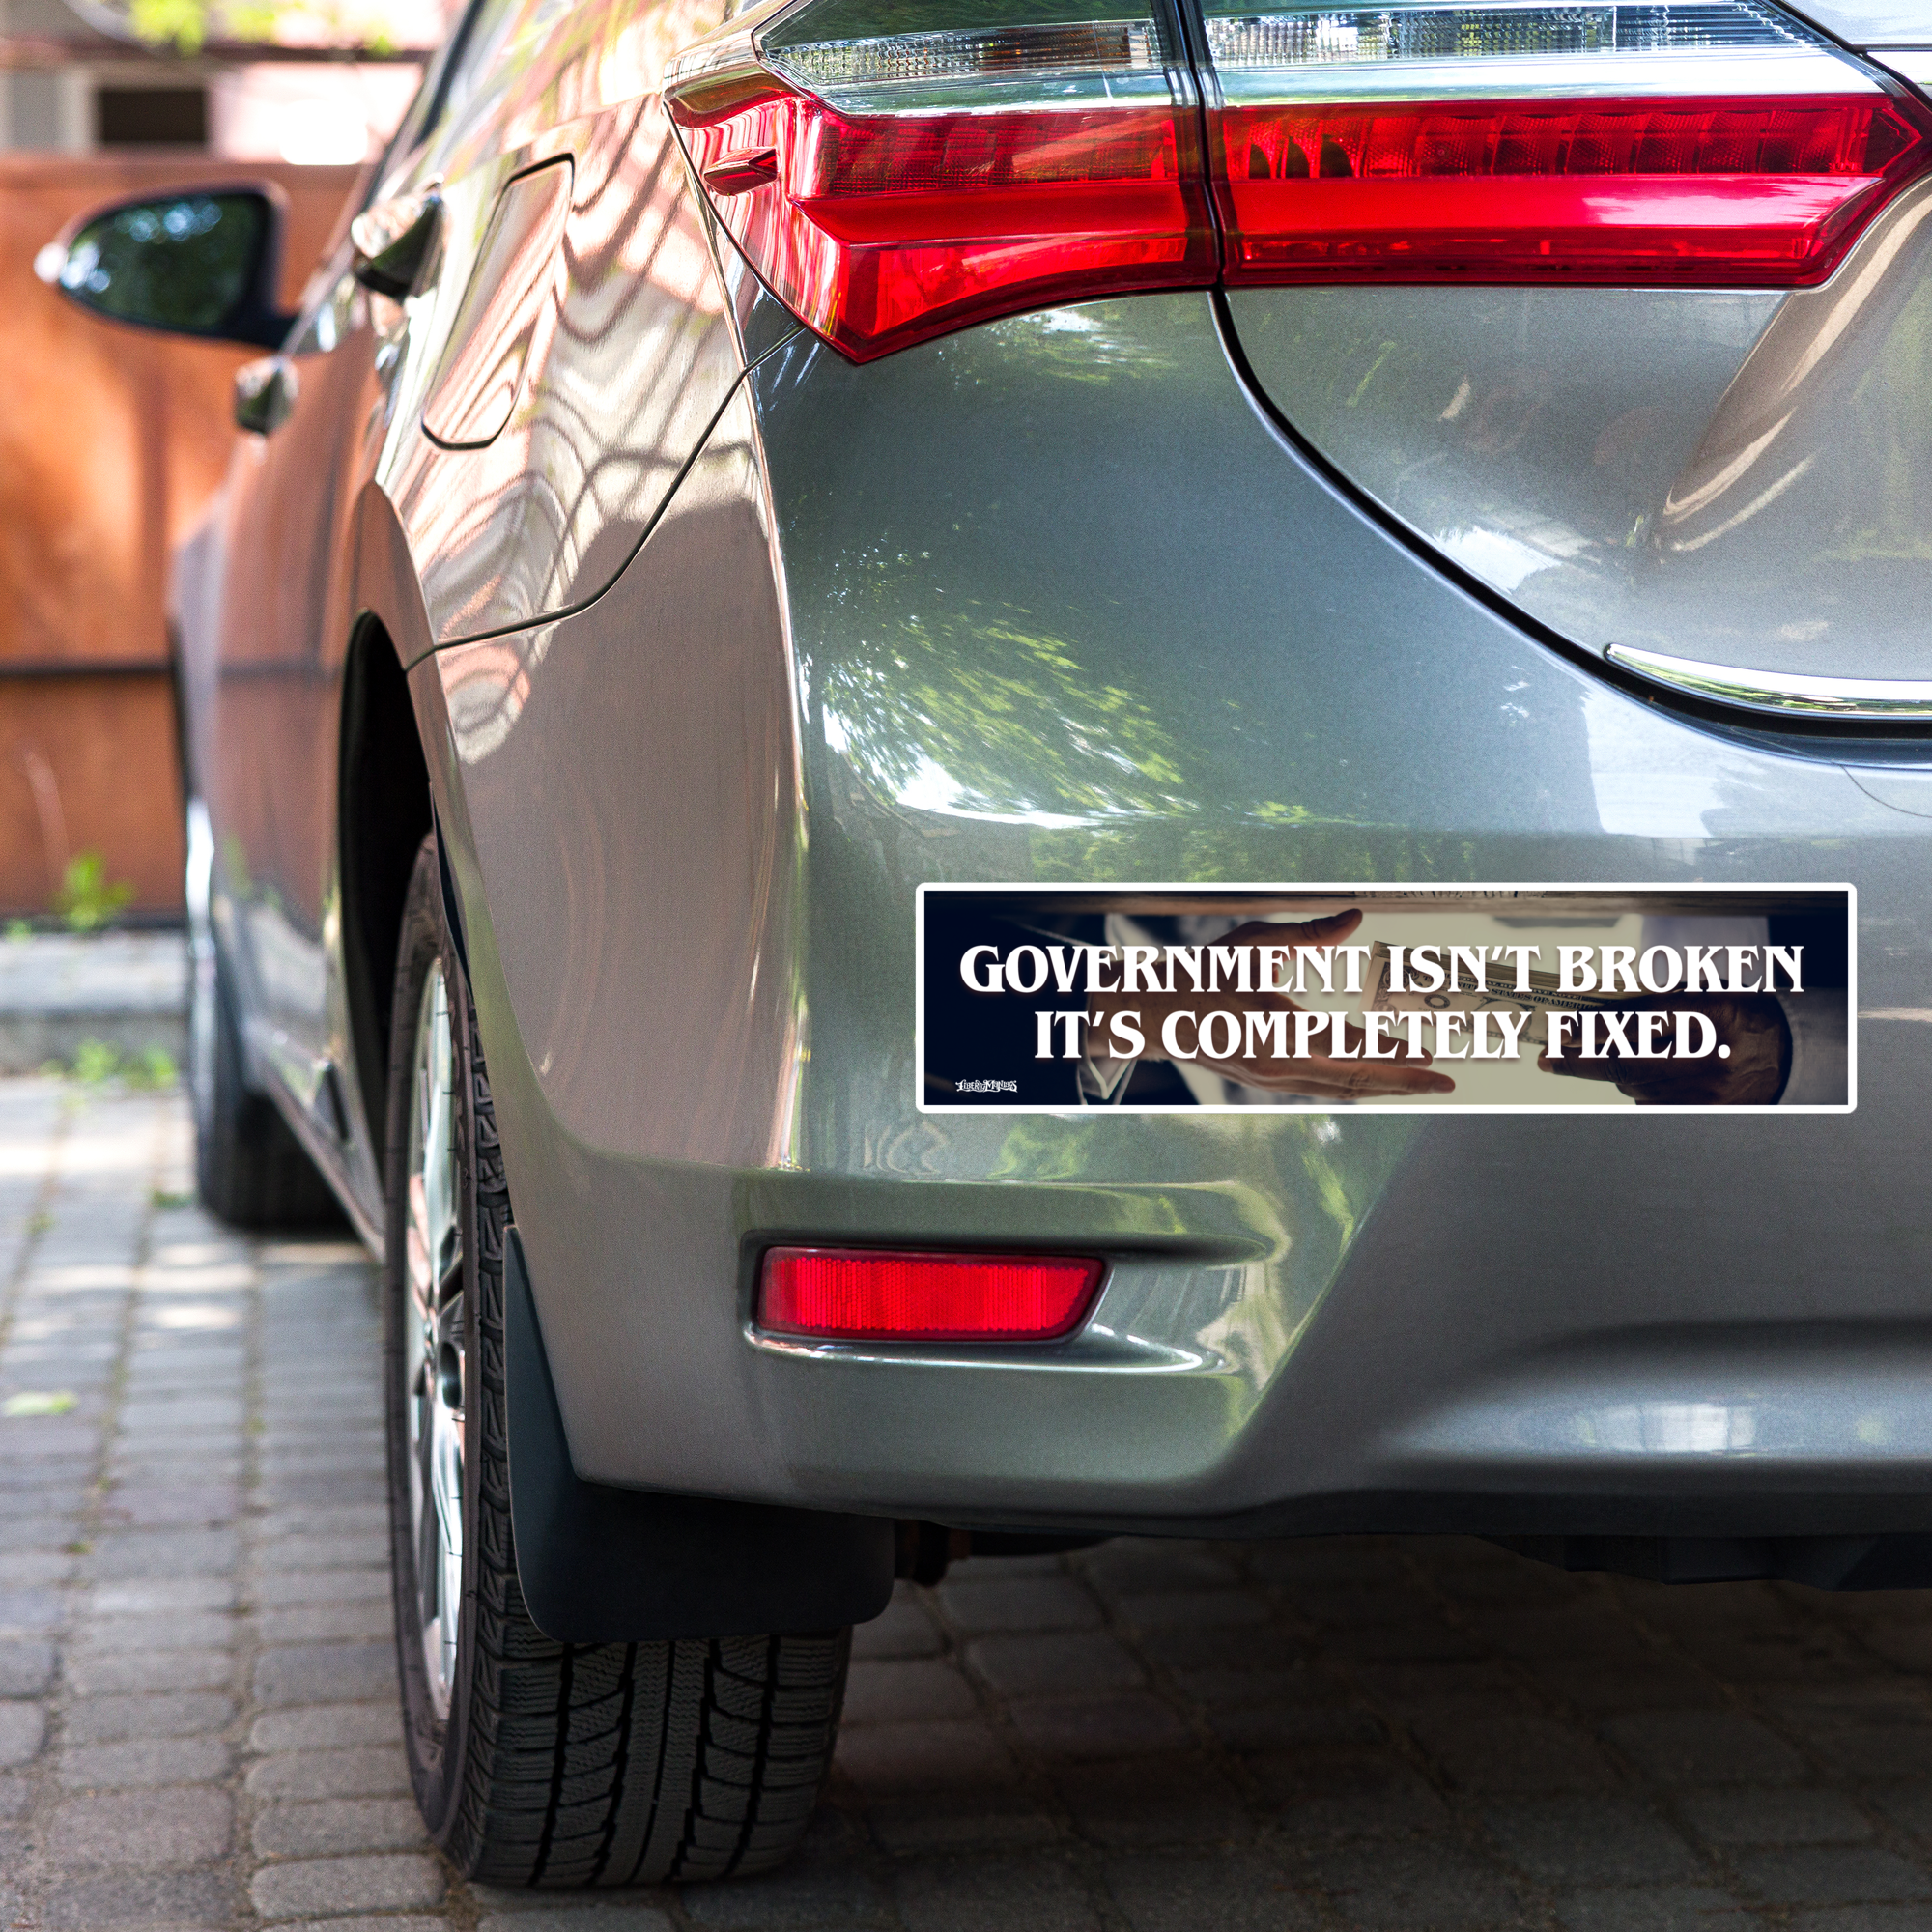 Government Isn't Broken It's Fixed Jumbo Bumper Sticker